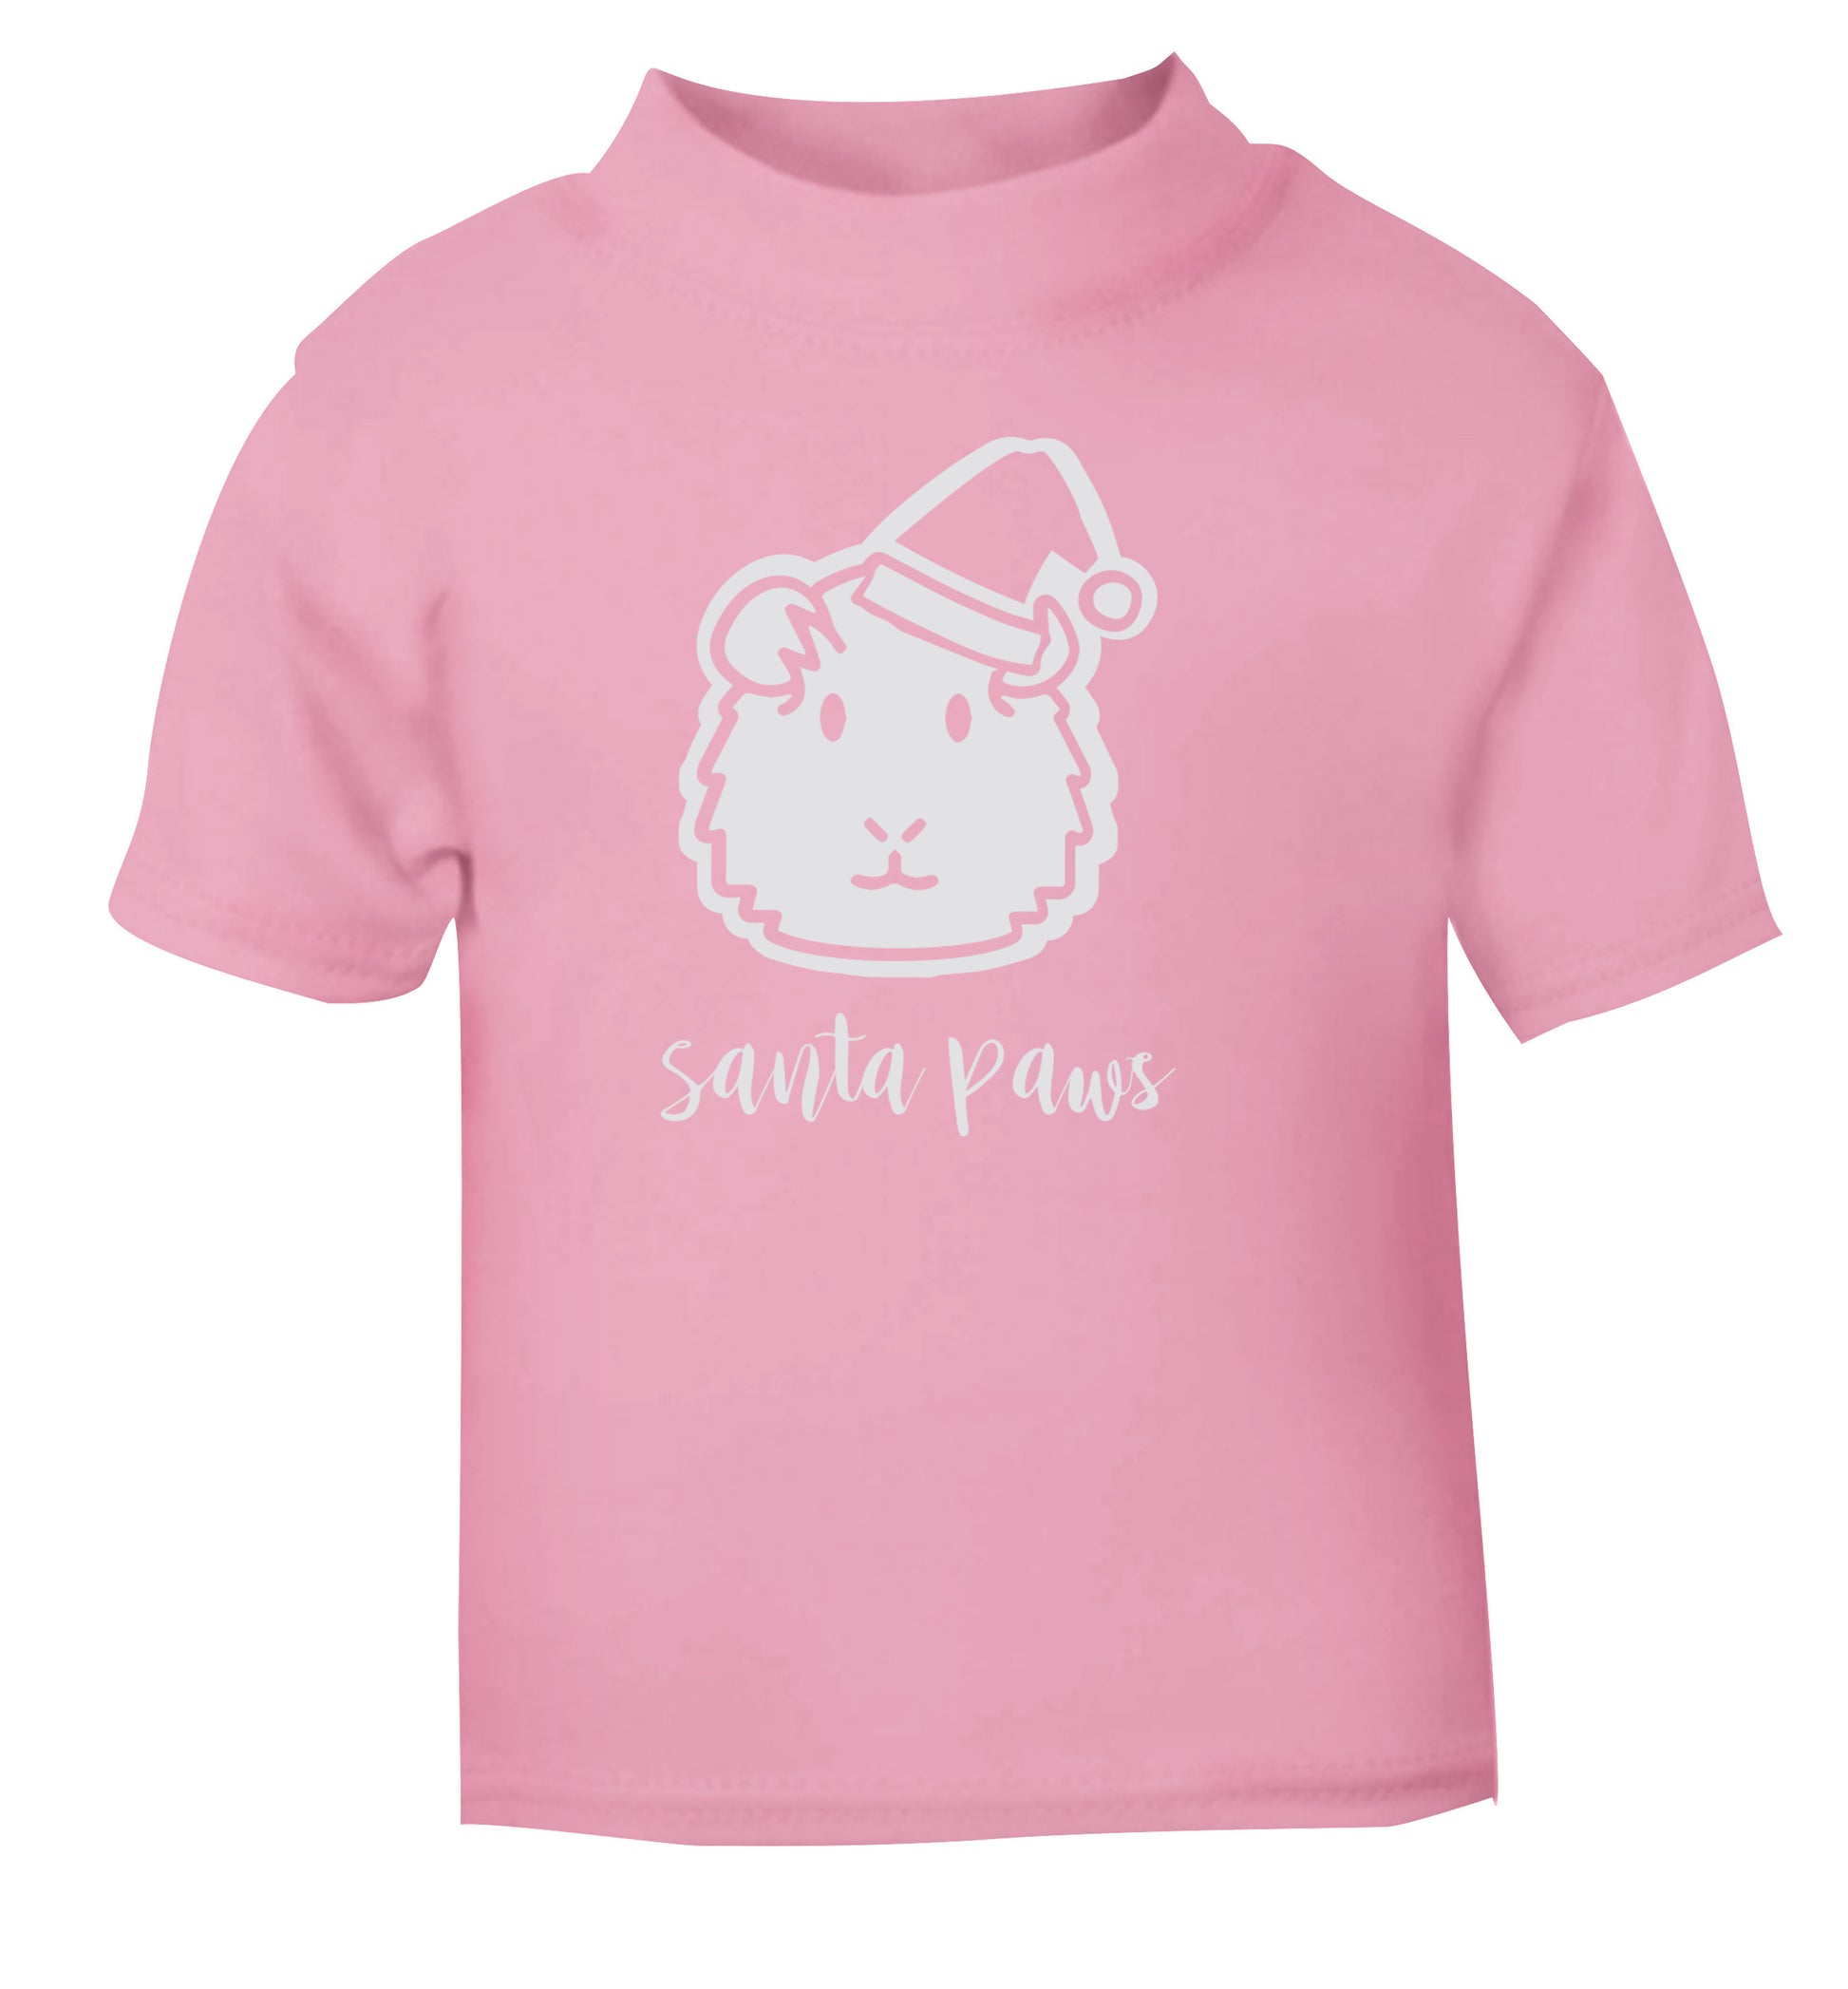 Guinea pig Santa Paws light pink Baby Toddler Tshirt 2 Years